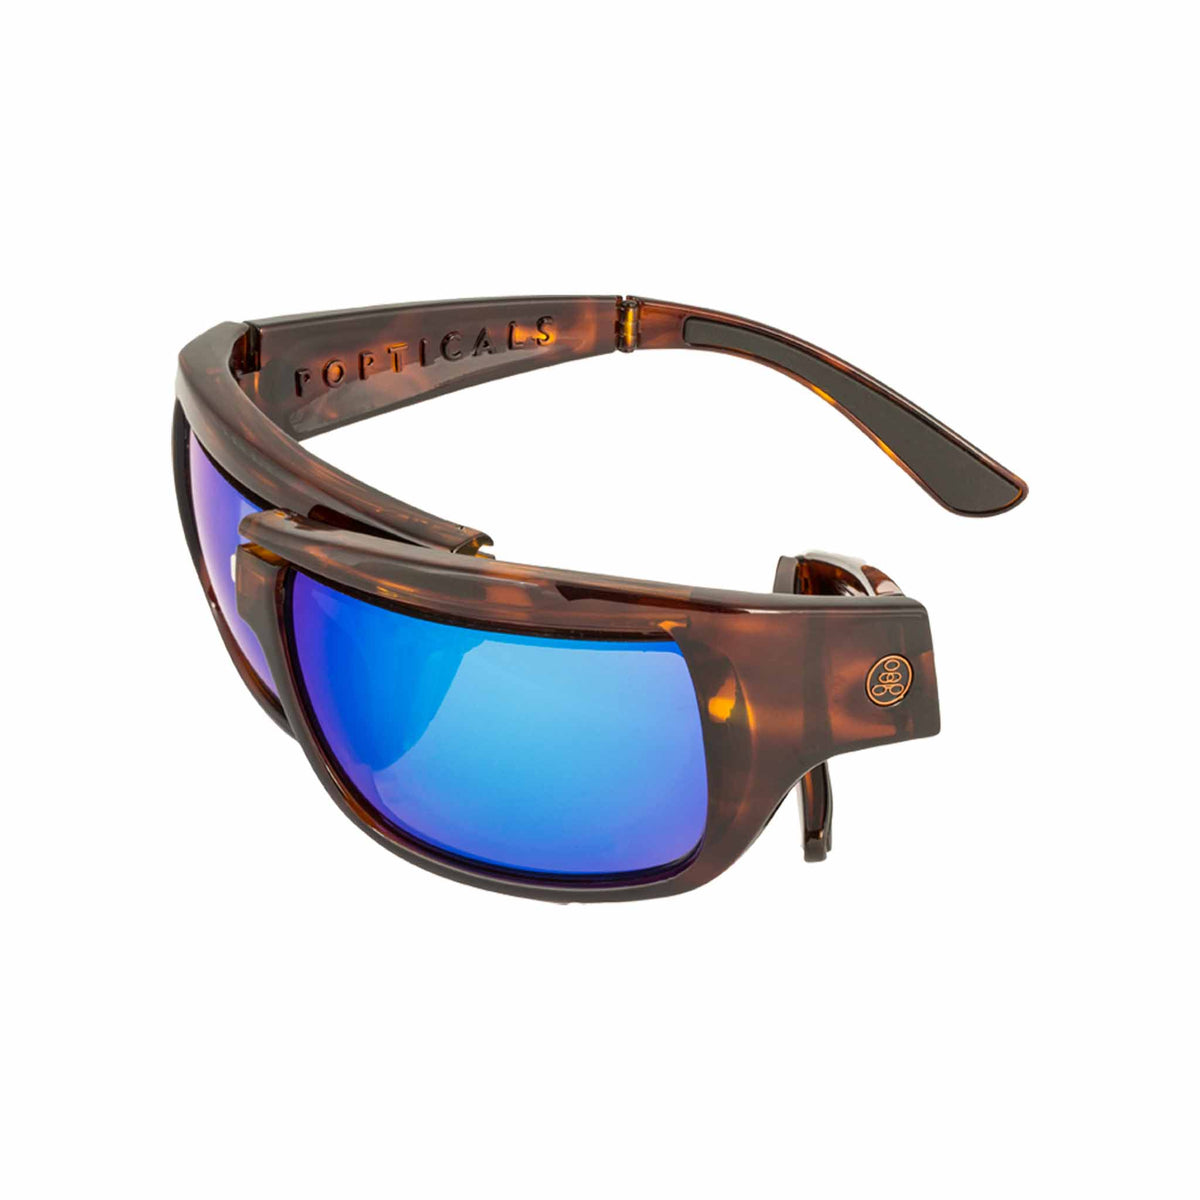 Popticals, Premium Compact Sunglasses, PopH2O, 010070-CTUN, Polarized Sunglasses, Gloss Tortoise Frame, Gray Lenses w/Blue Mirror Finish, Spider View